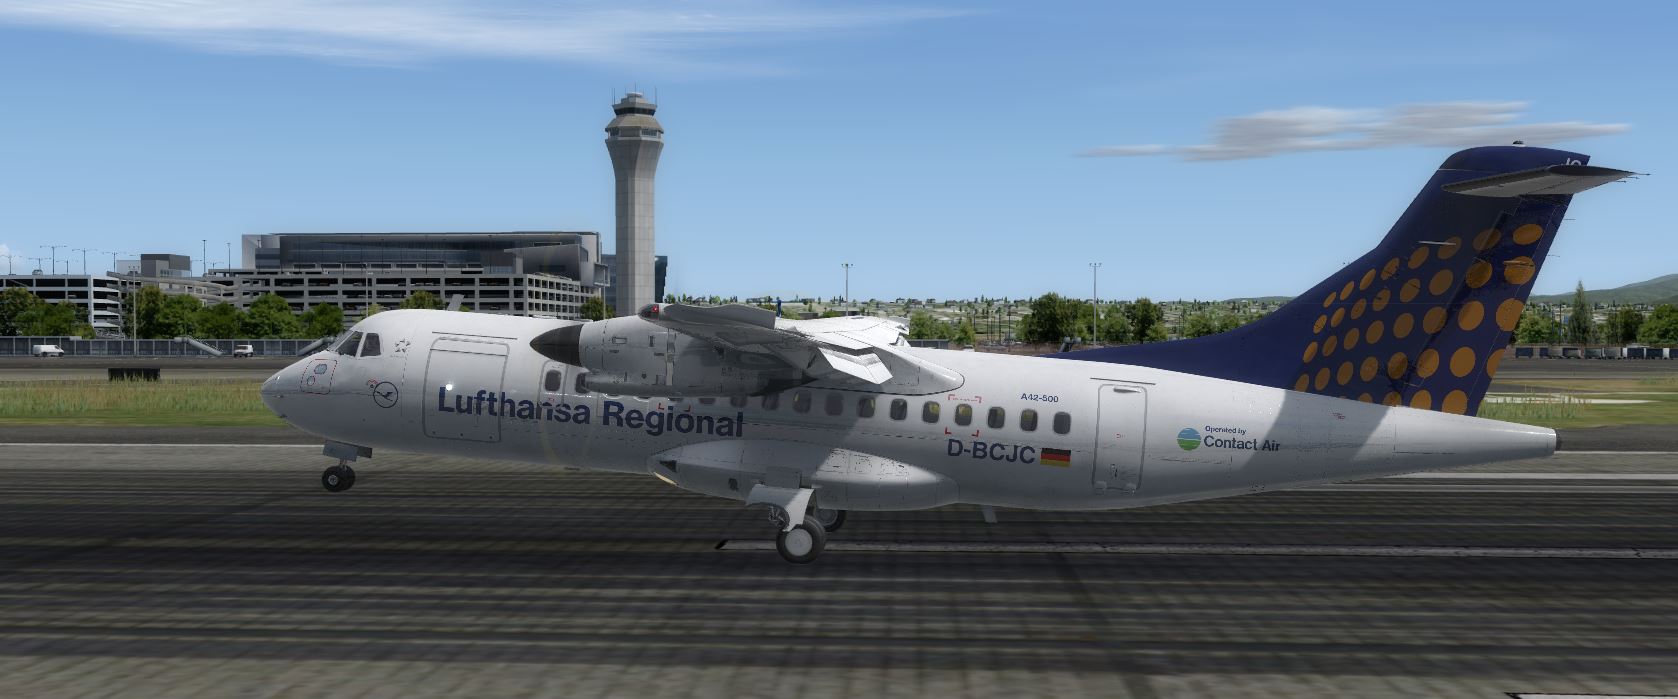 ATR42-500 Lufthansa-1849 